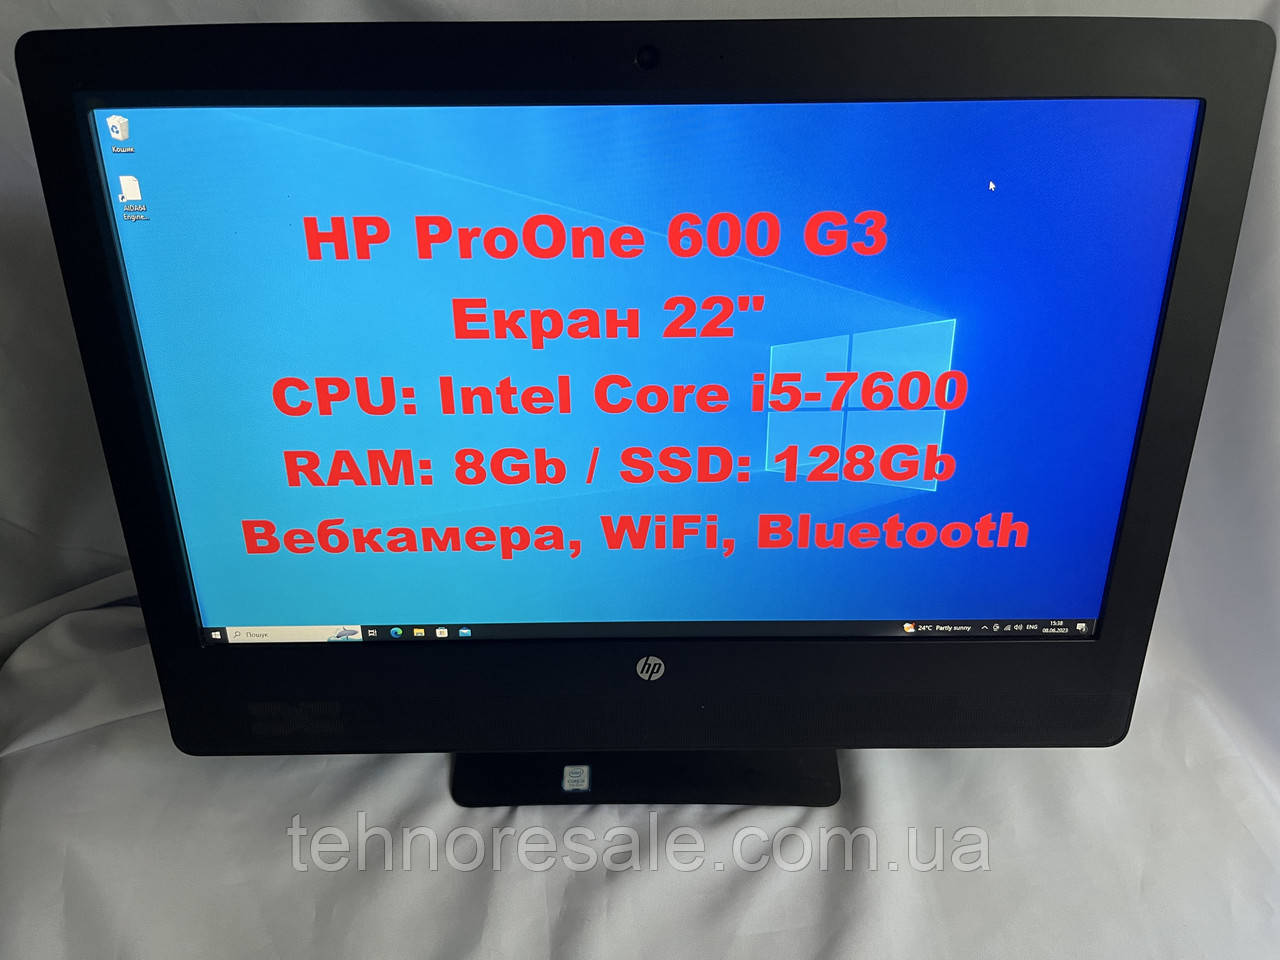 Моноблок HP ProOne 600 G3 IPS 22", i5-7600, 8/128Gb, вебкамера, стерео